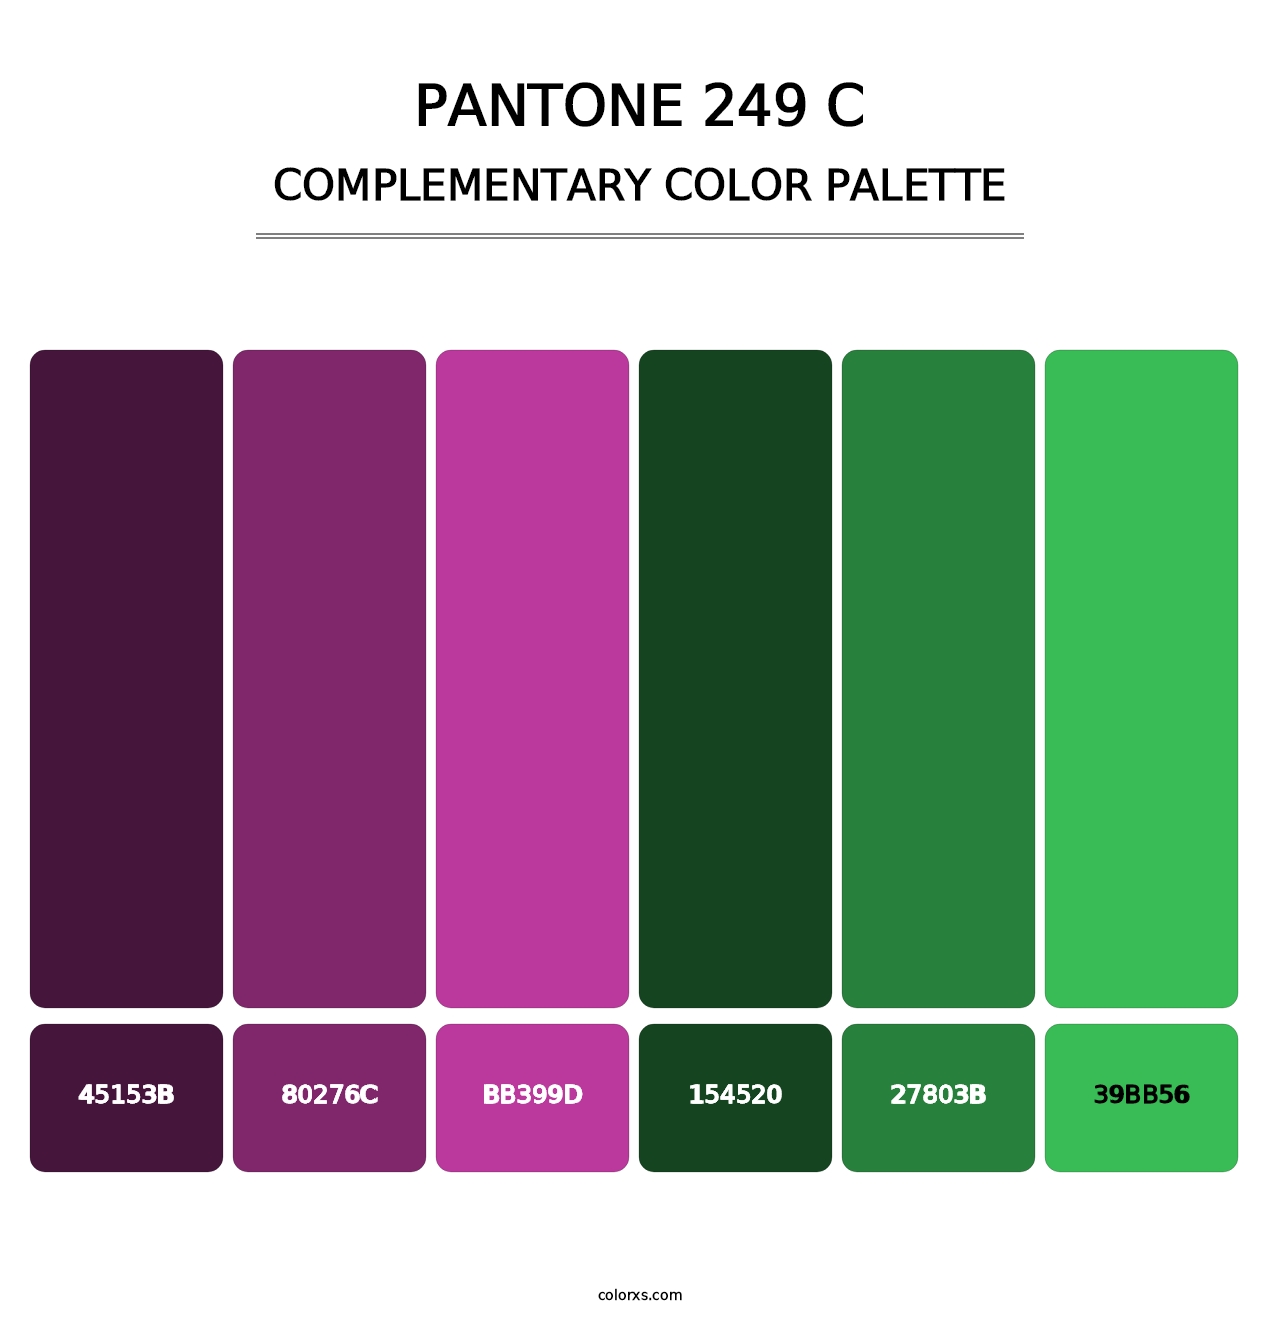 PANTONE 249 C - Complementary Color Palette